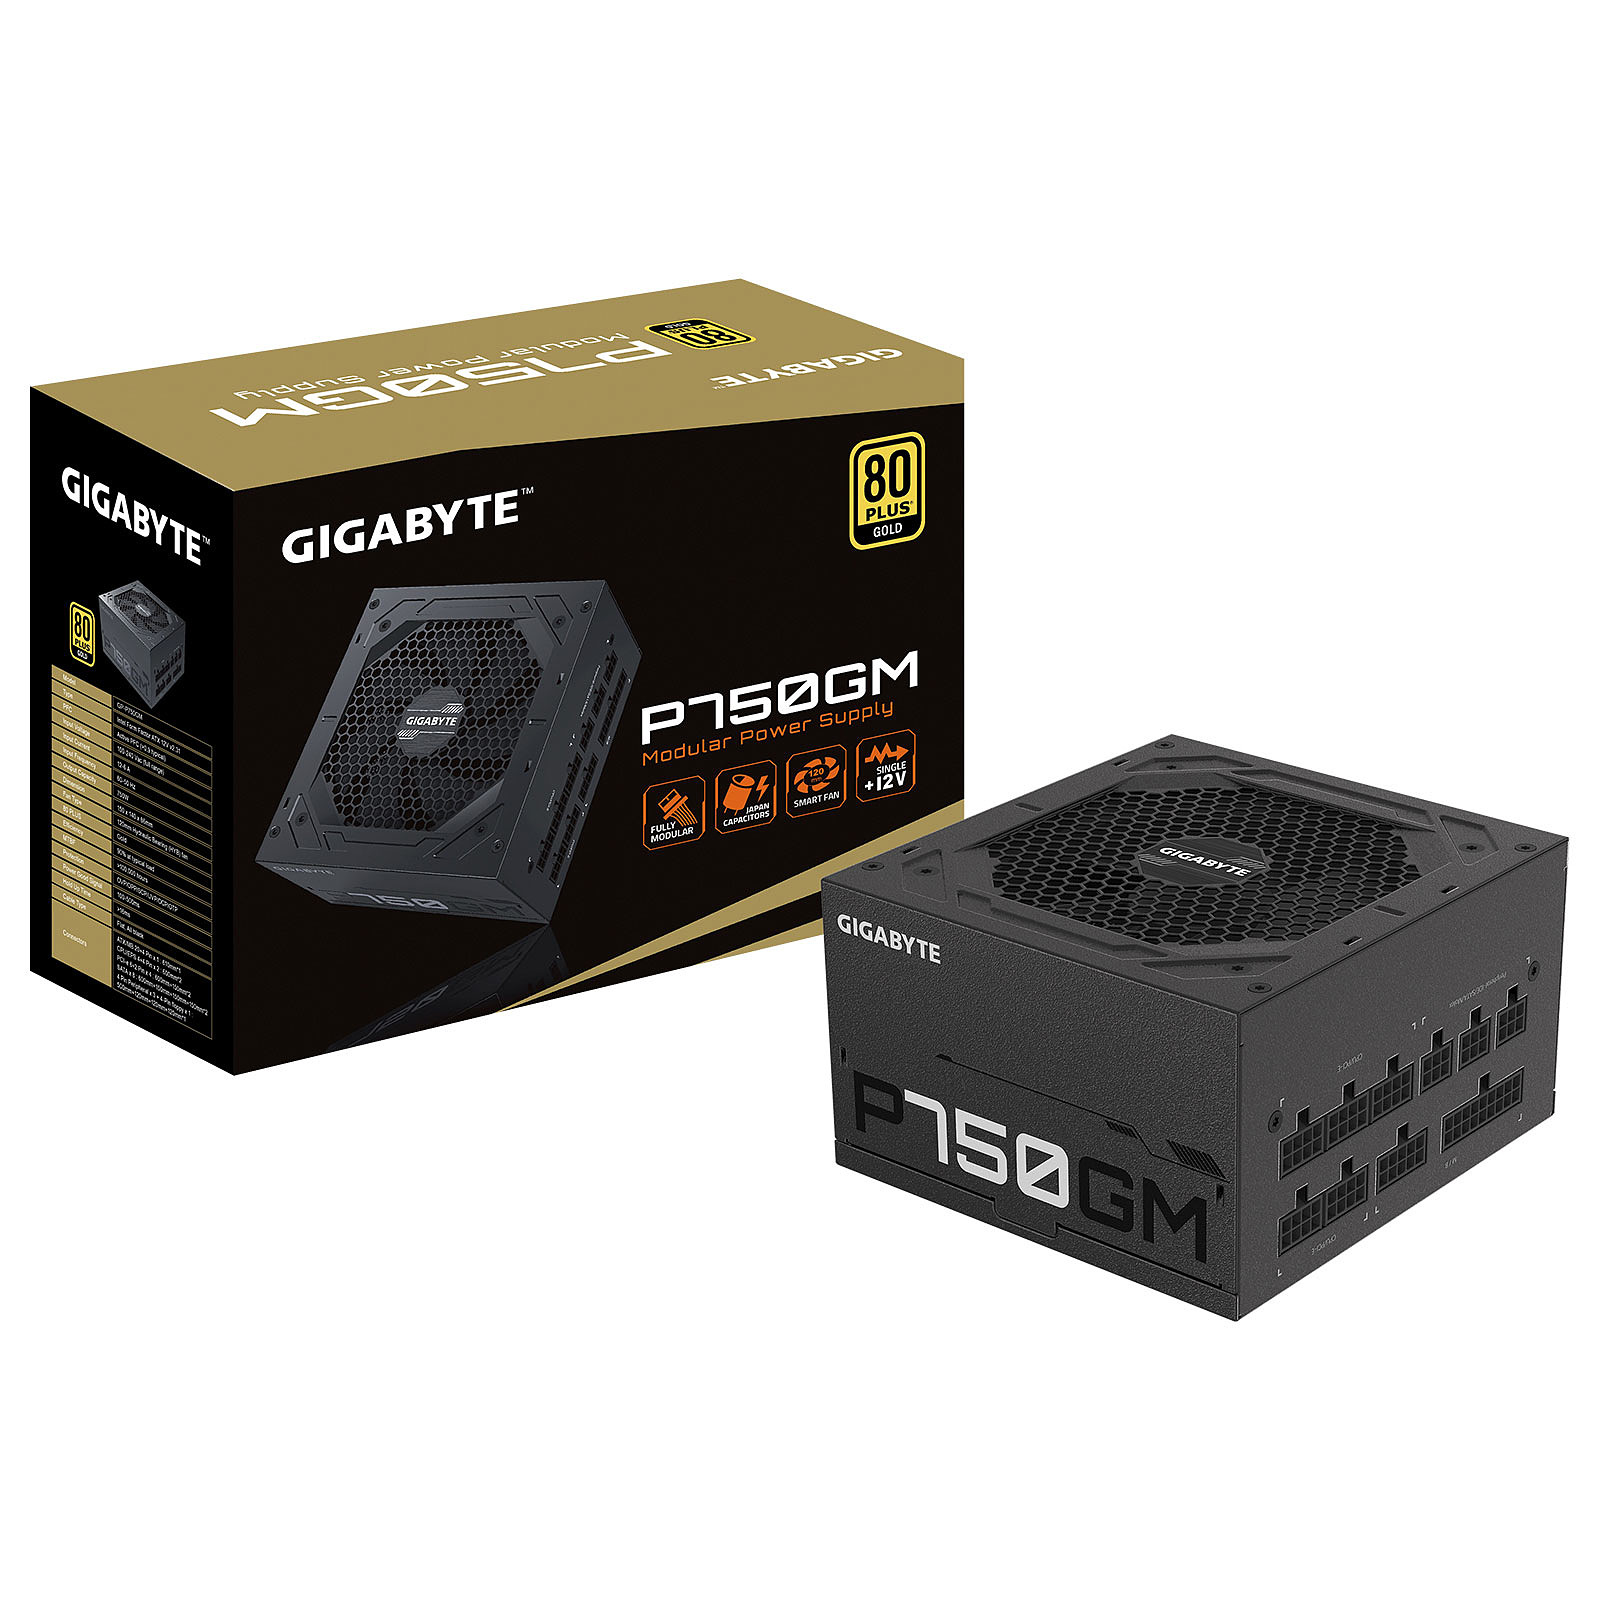 Gigabyte GP-P750GM Modulaire 80+ Gold - Pc gamer maroc